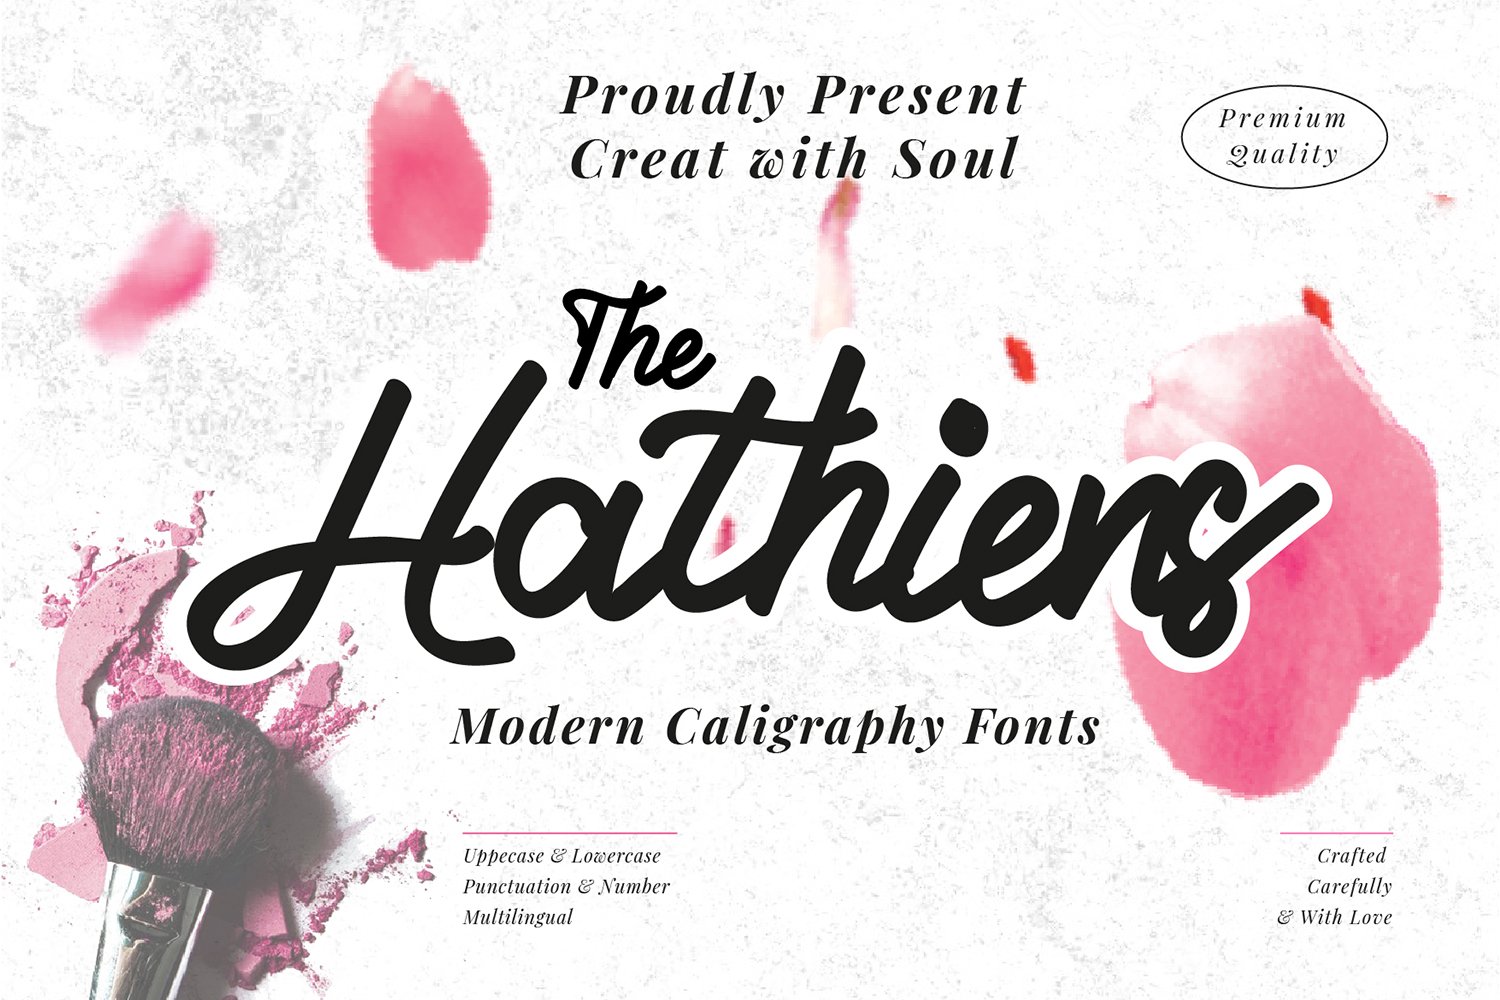 The Hathiens - Modern Script fonts cover image.